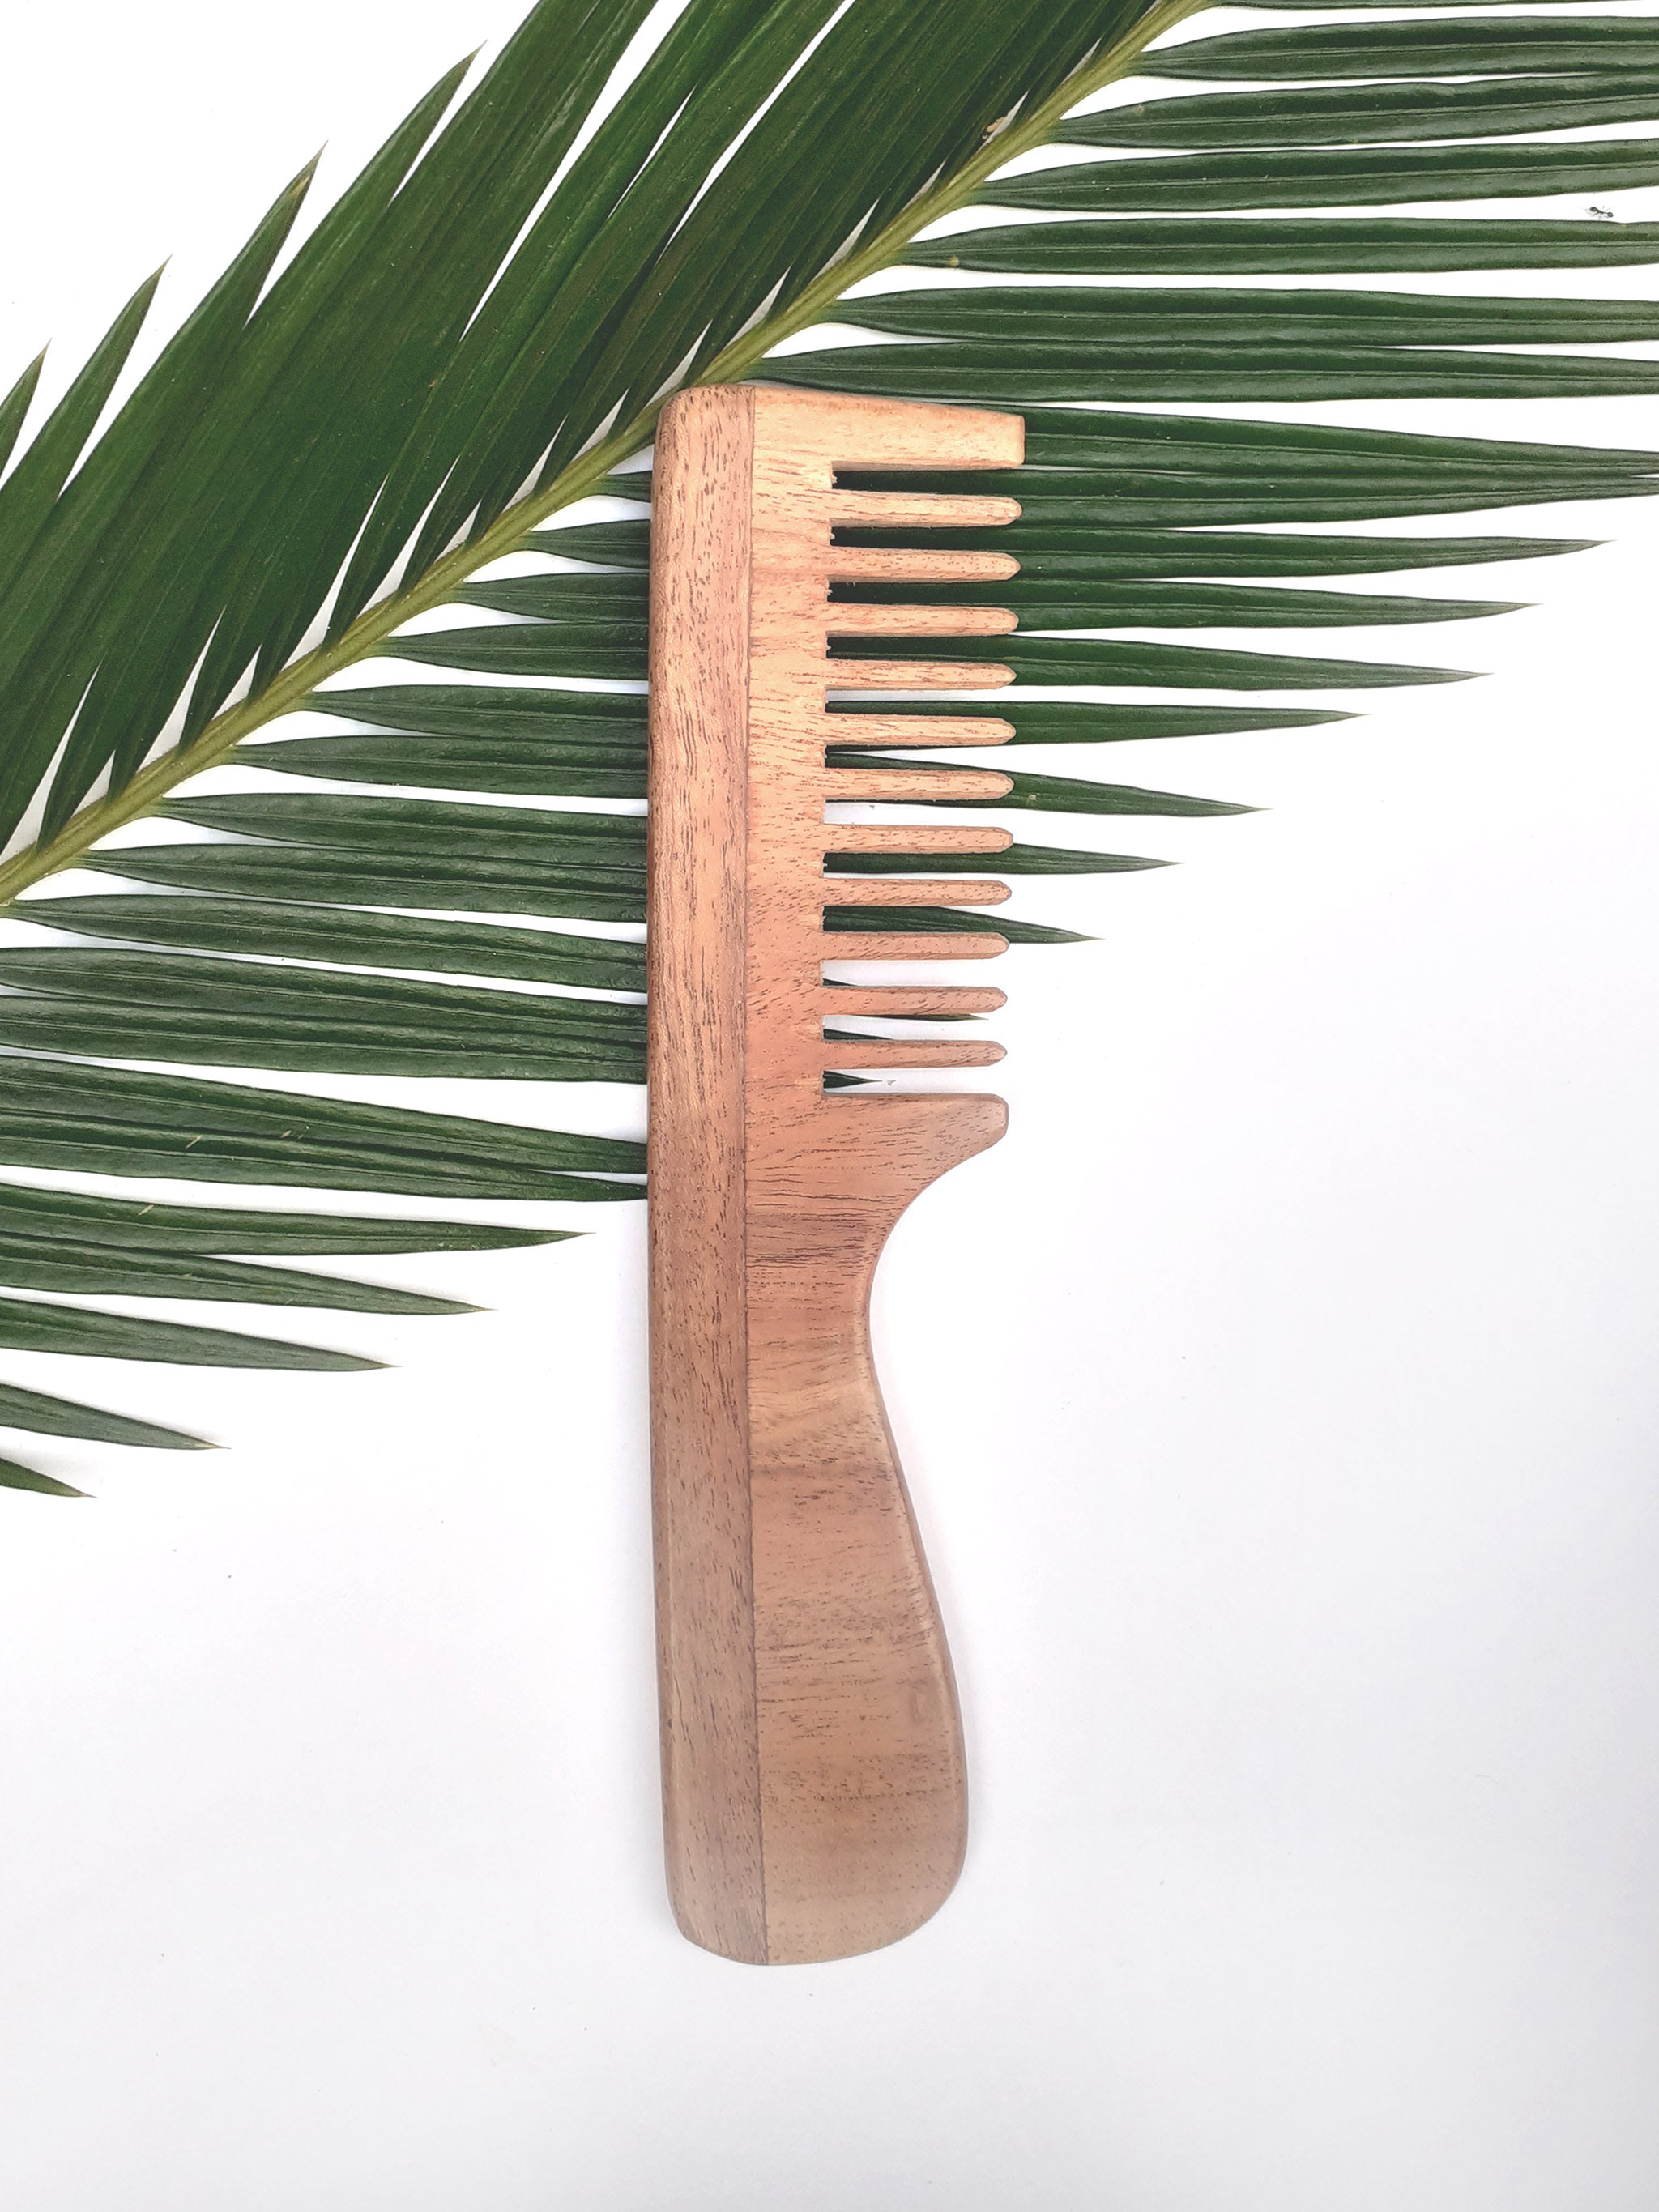 Naadam Cashmere Comb in Natural Wood, 4 x 10